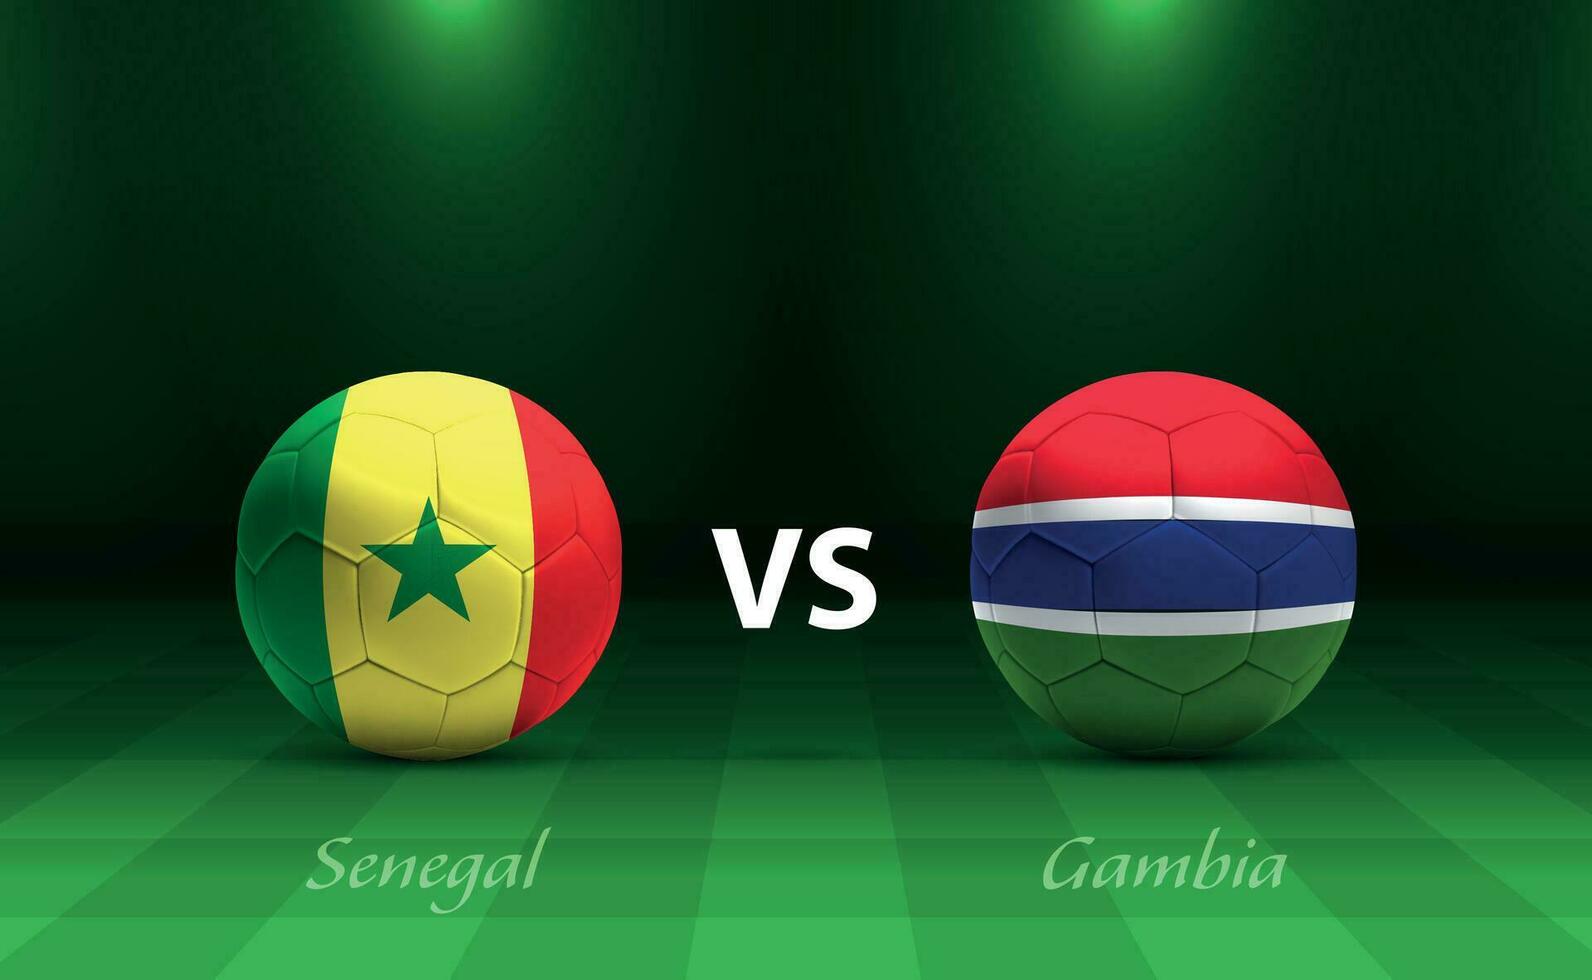 Senegal vs Gambia fútbol americano marcador transmitir modelo vector